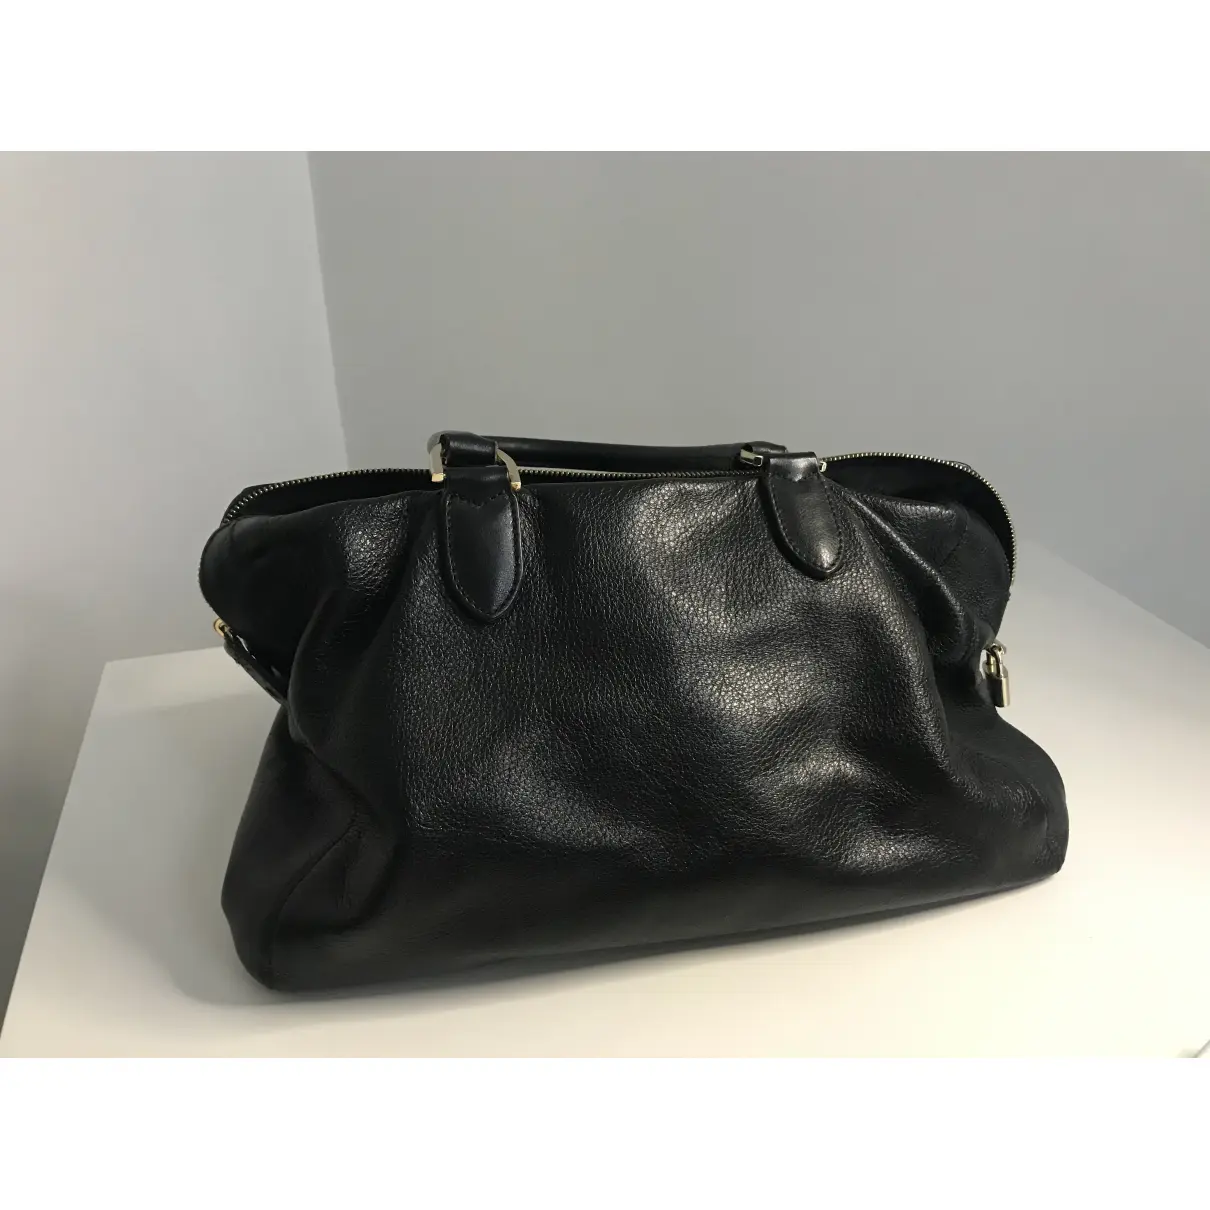 Buy Mulberry Del Rey leather handbag online